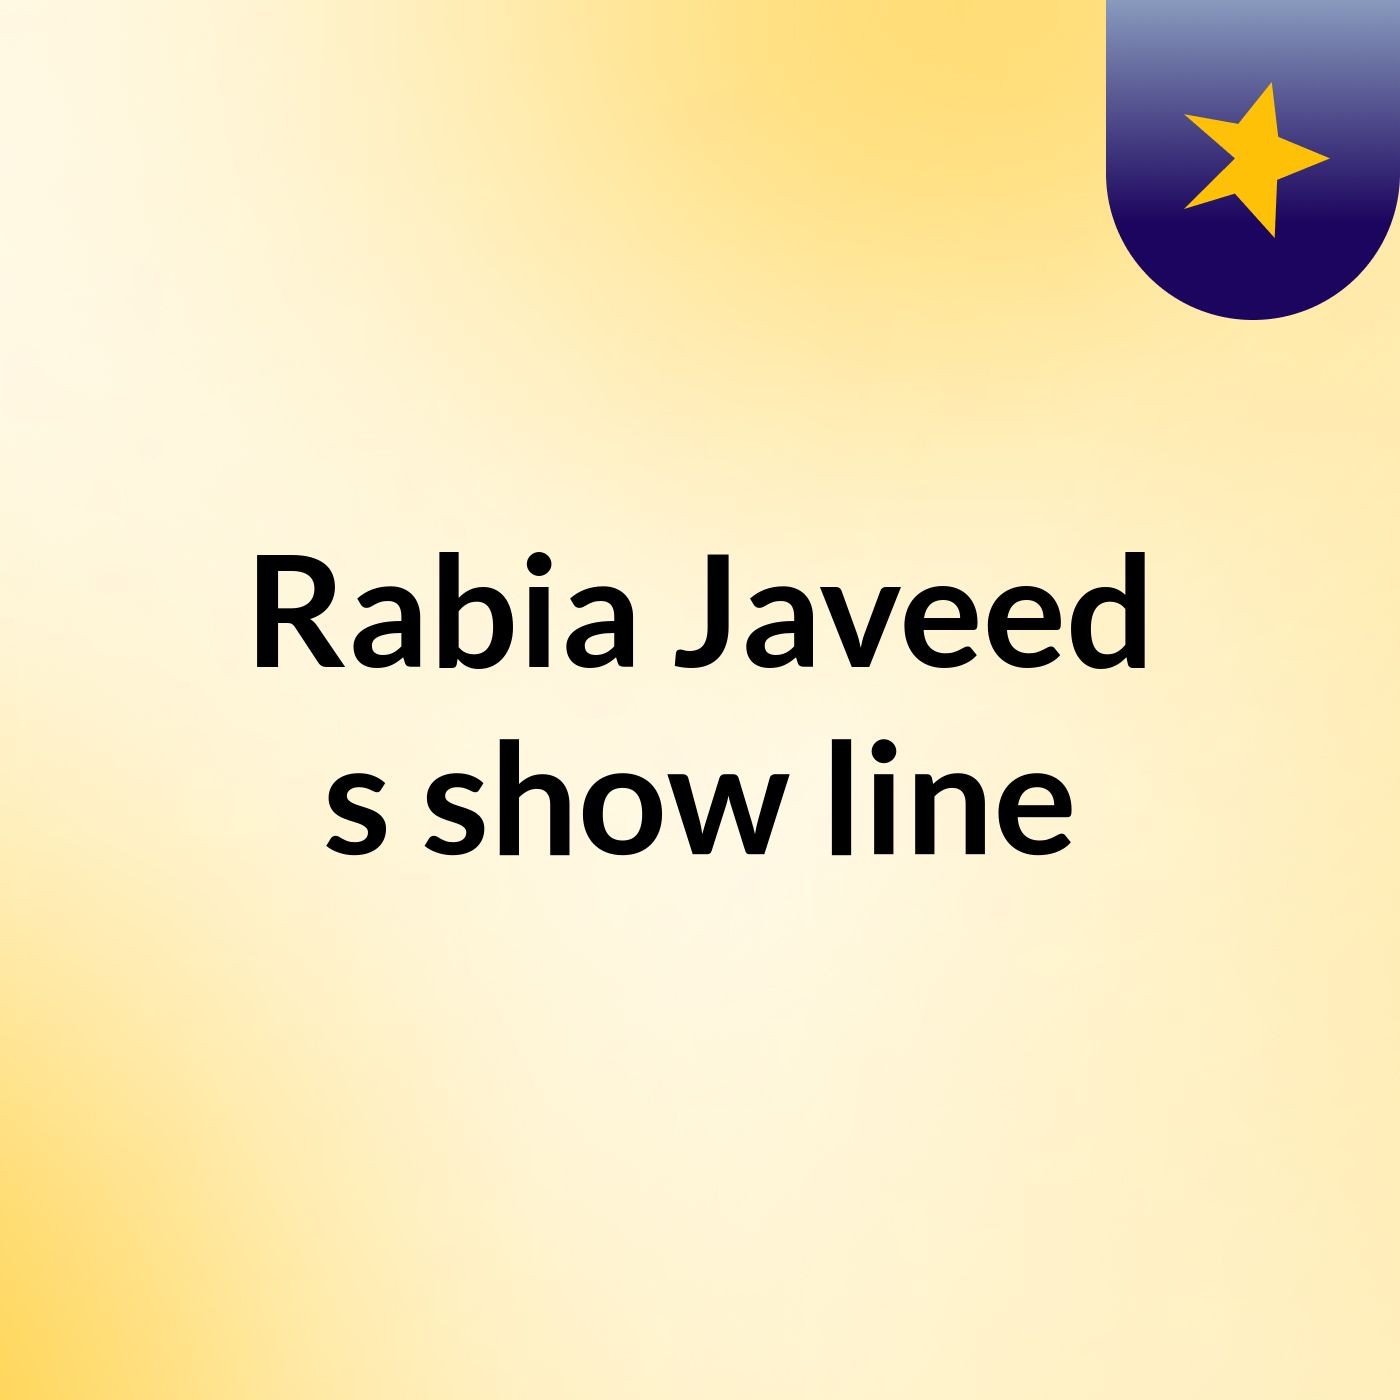 Rabia Javeed's show line